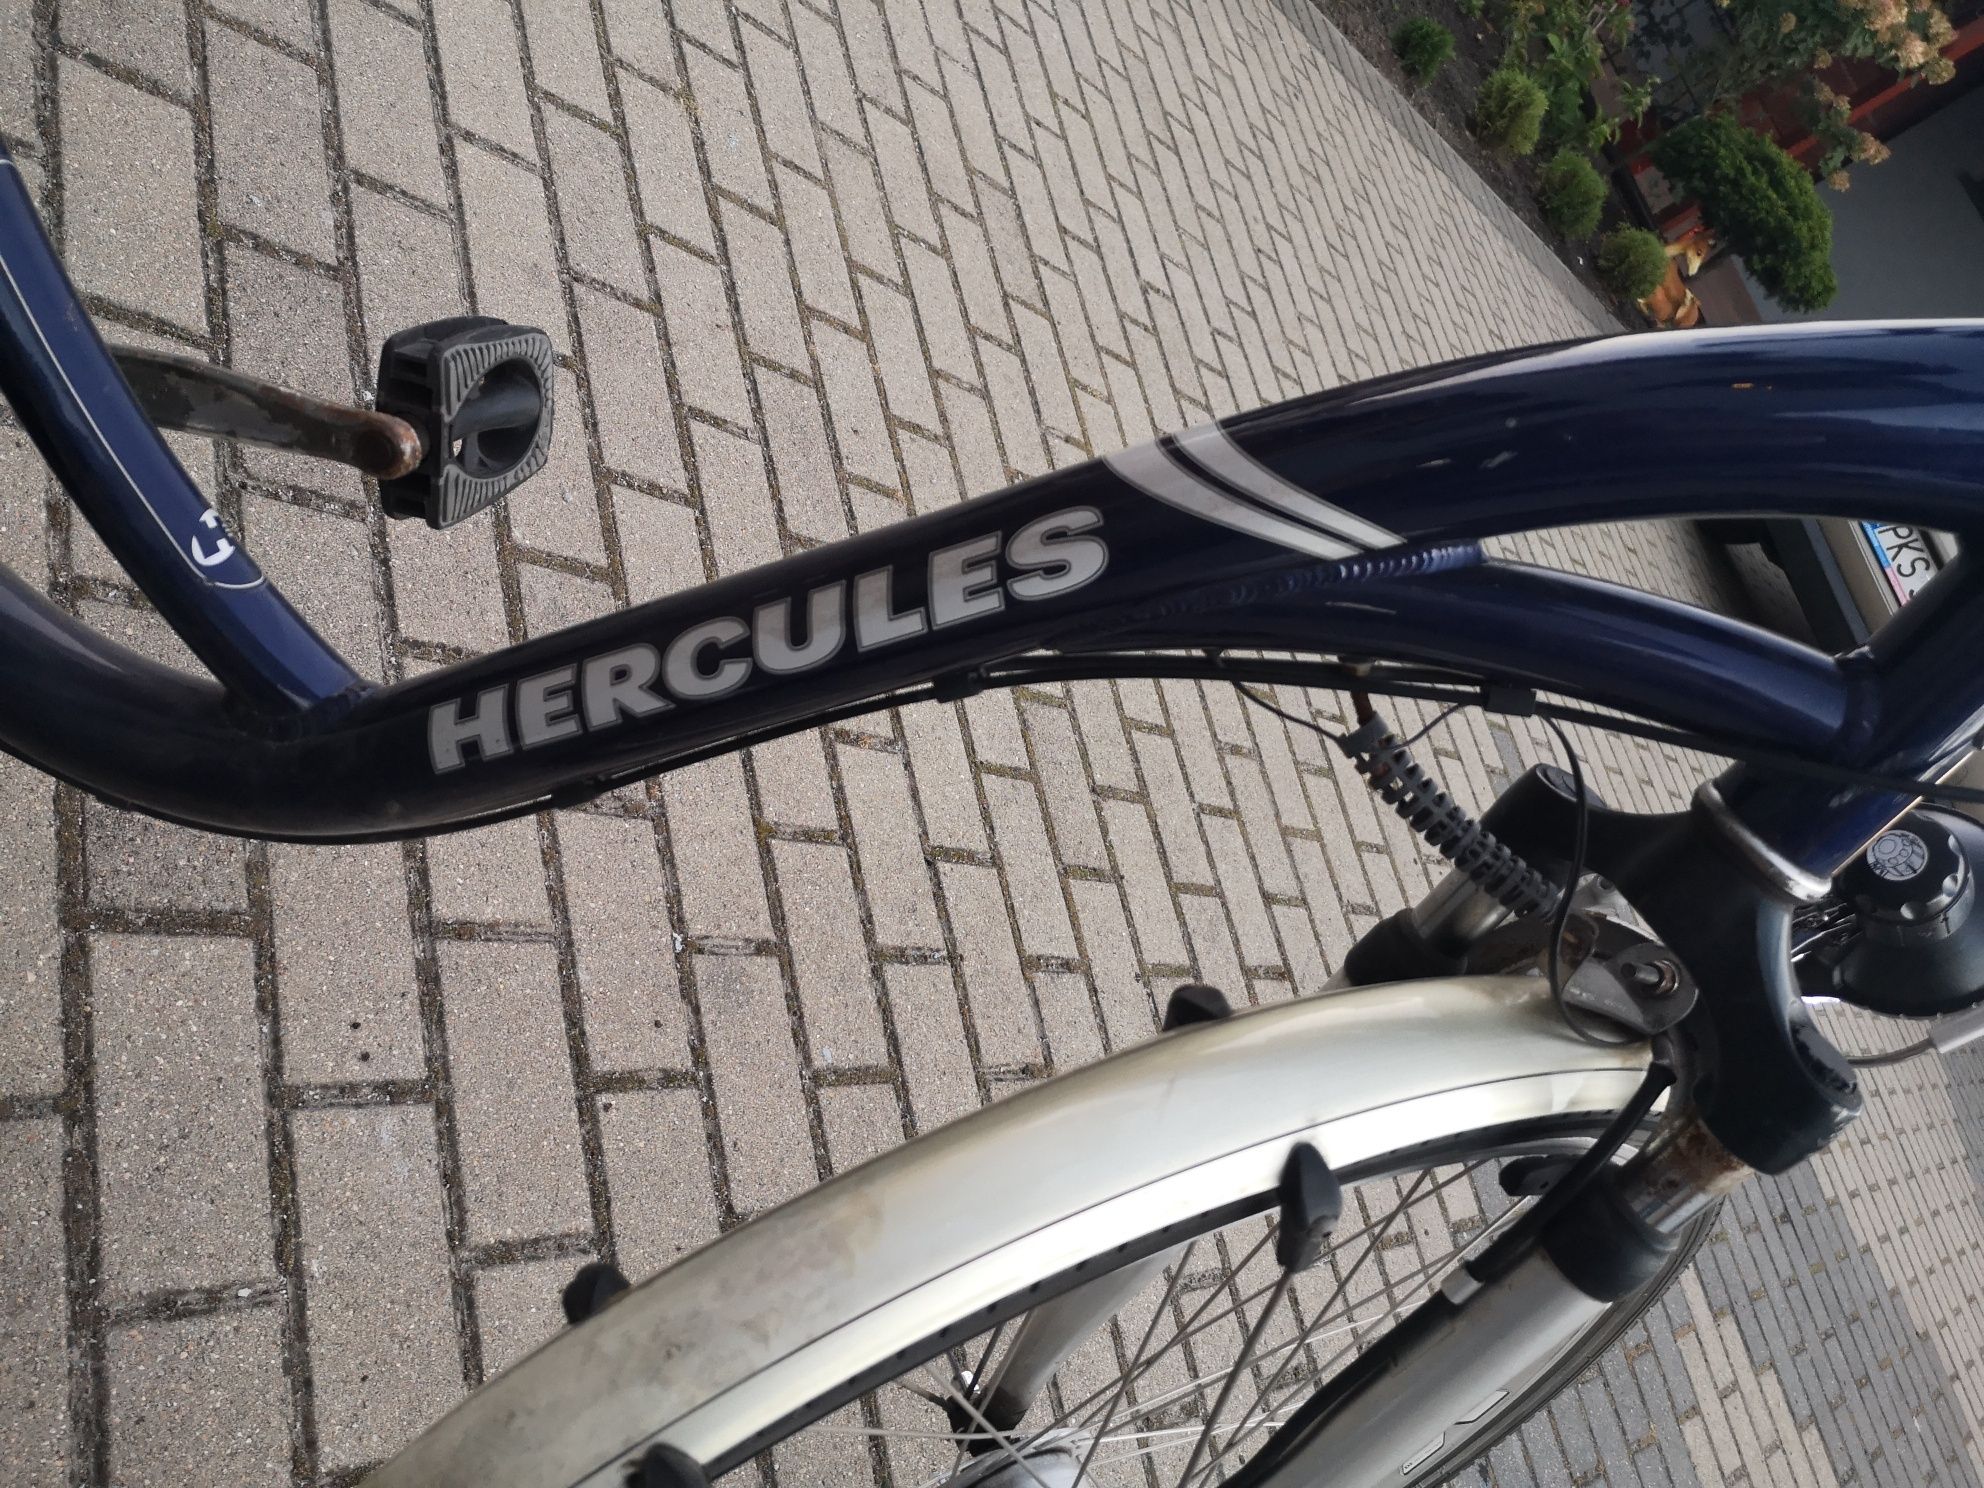 Sprzedam rower Hercules